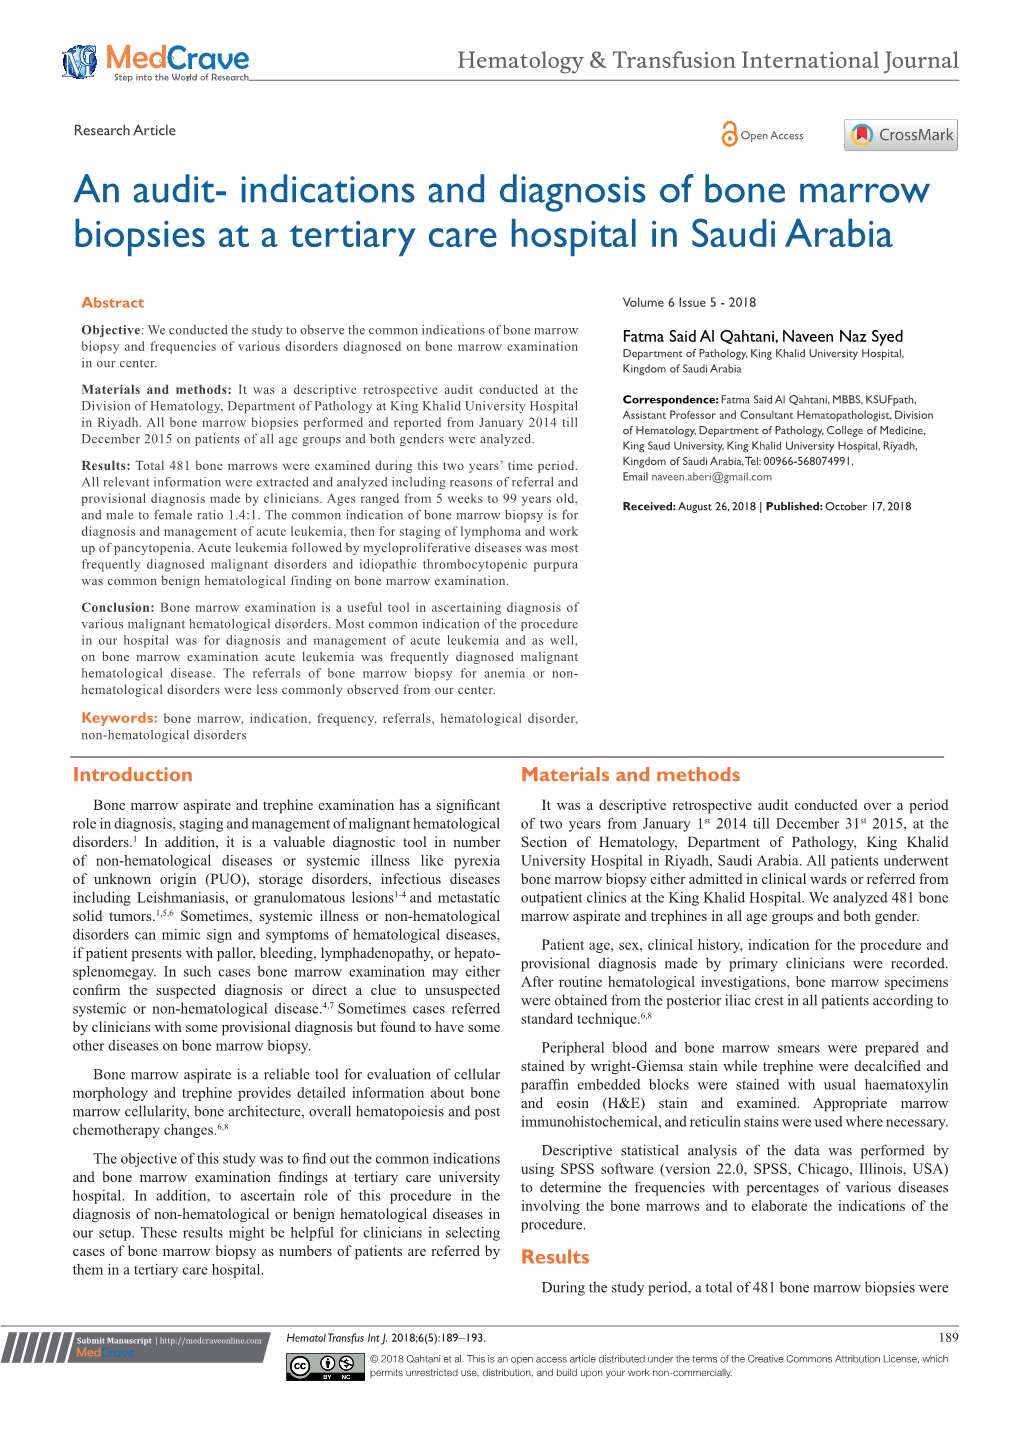 An Audit- Indications and Diagnosis of Bone Marrow Biopsies at a Tertiary Care Hospital in Saudi Arabia